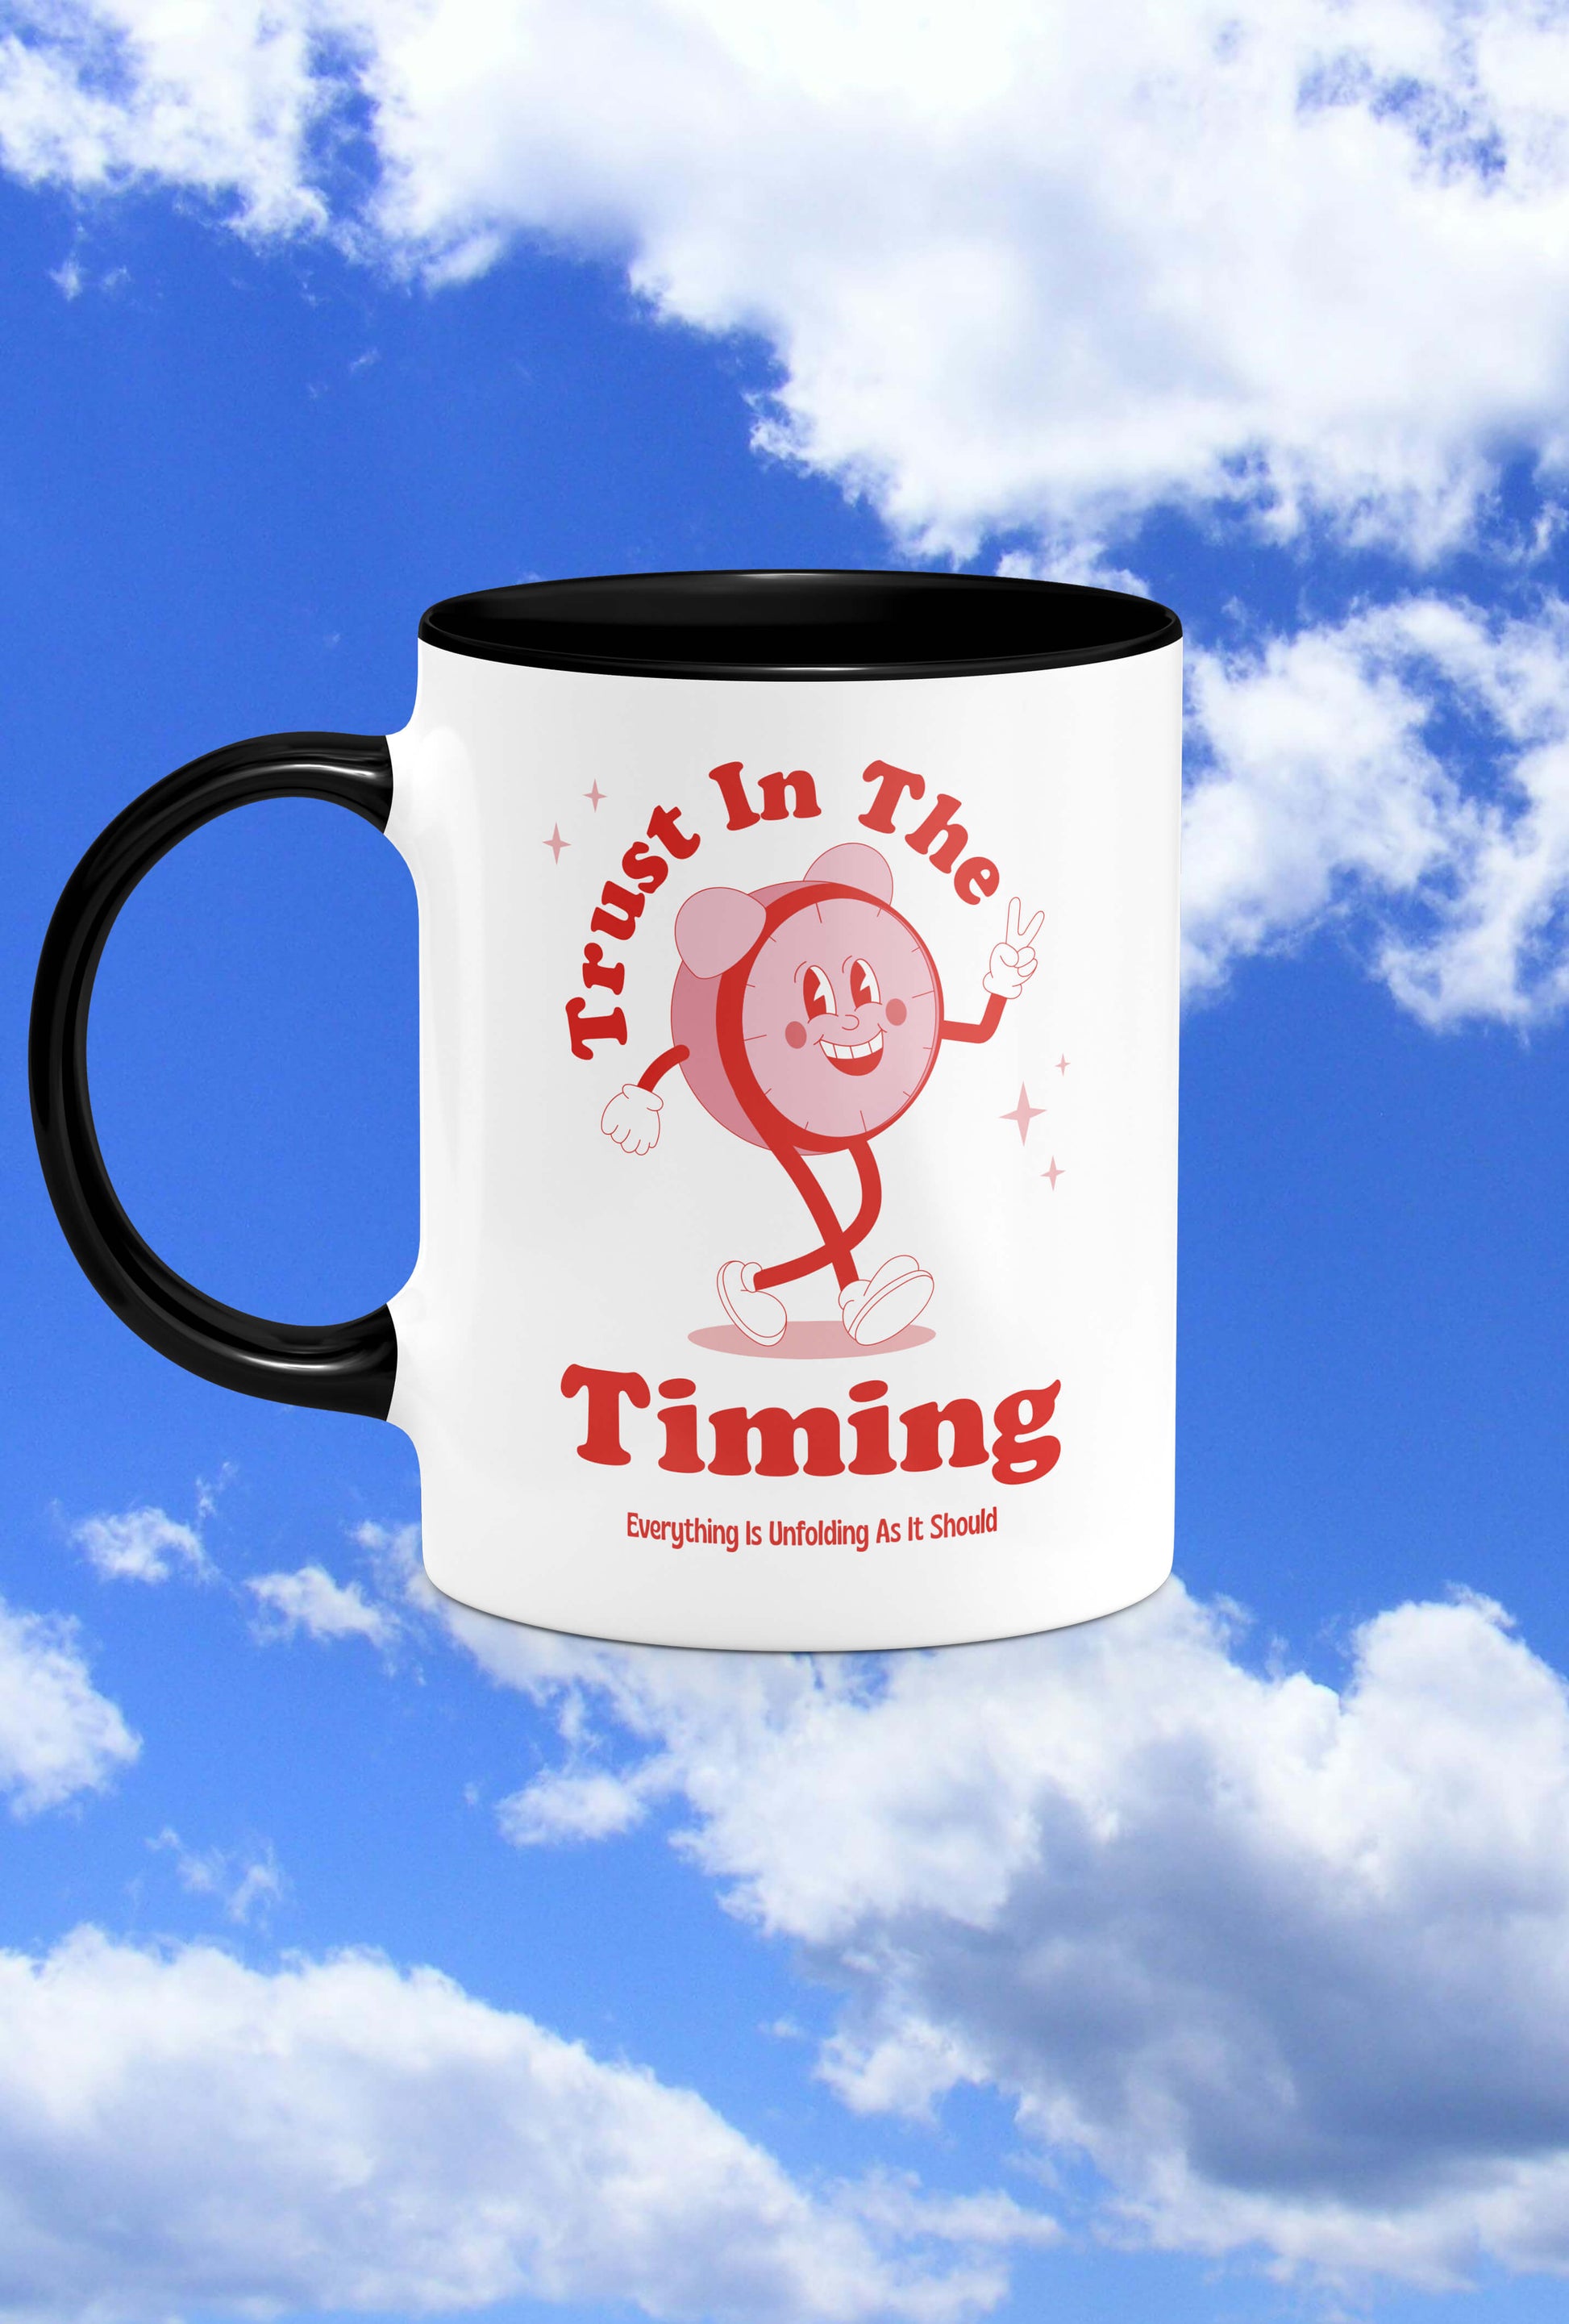 Trust in the timing mug, wellness mindfulness mug, positive affirmations